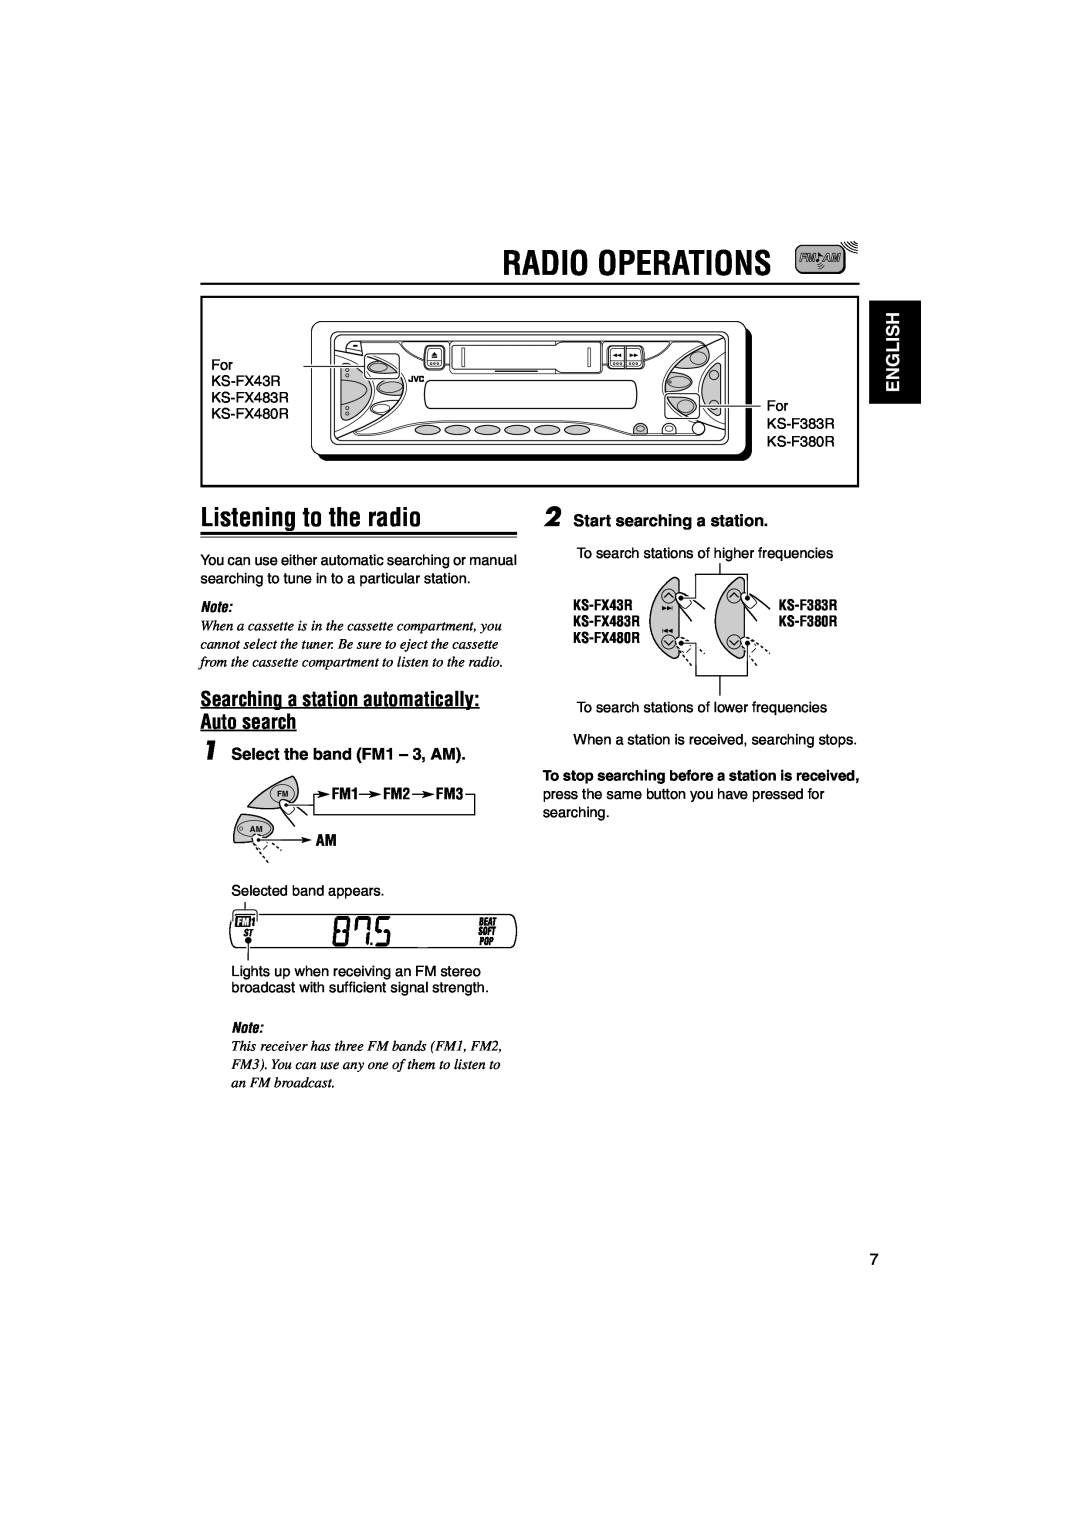 JVC KS-F380R Radio Operations, Listening to the radio, Searching a station automatically Auto search, English, KS-FX43R 